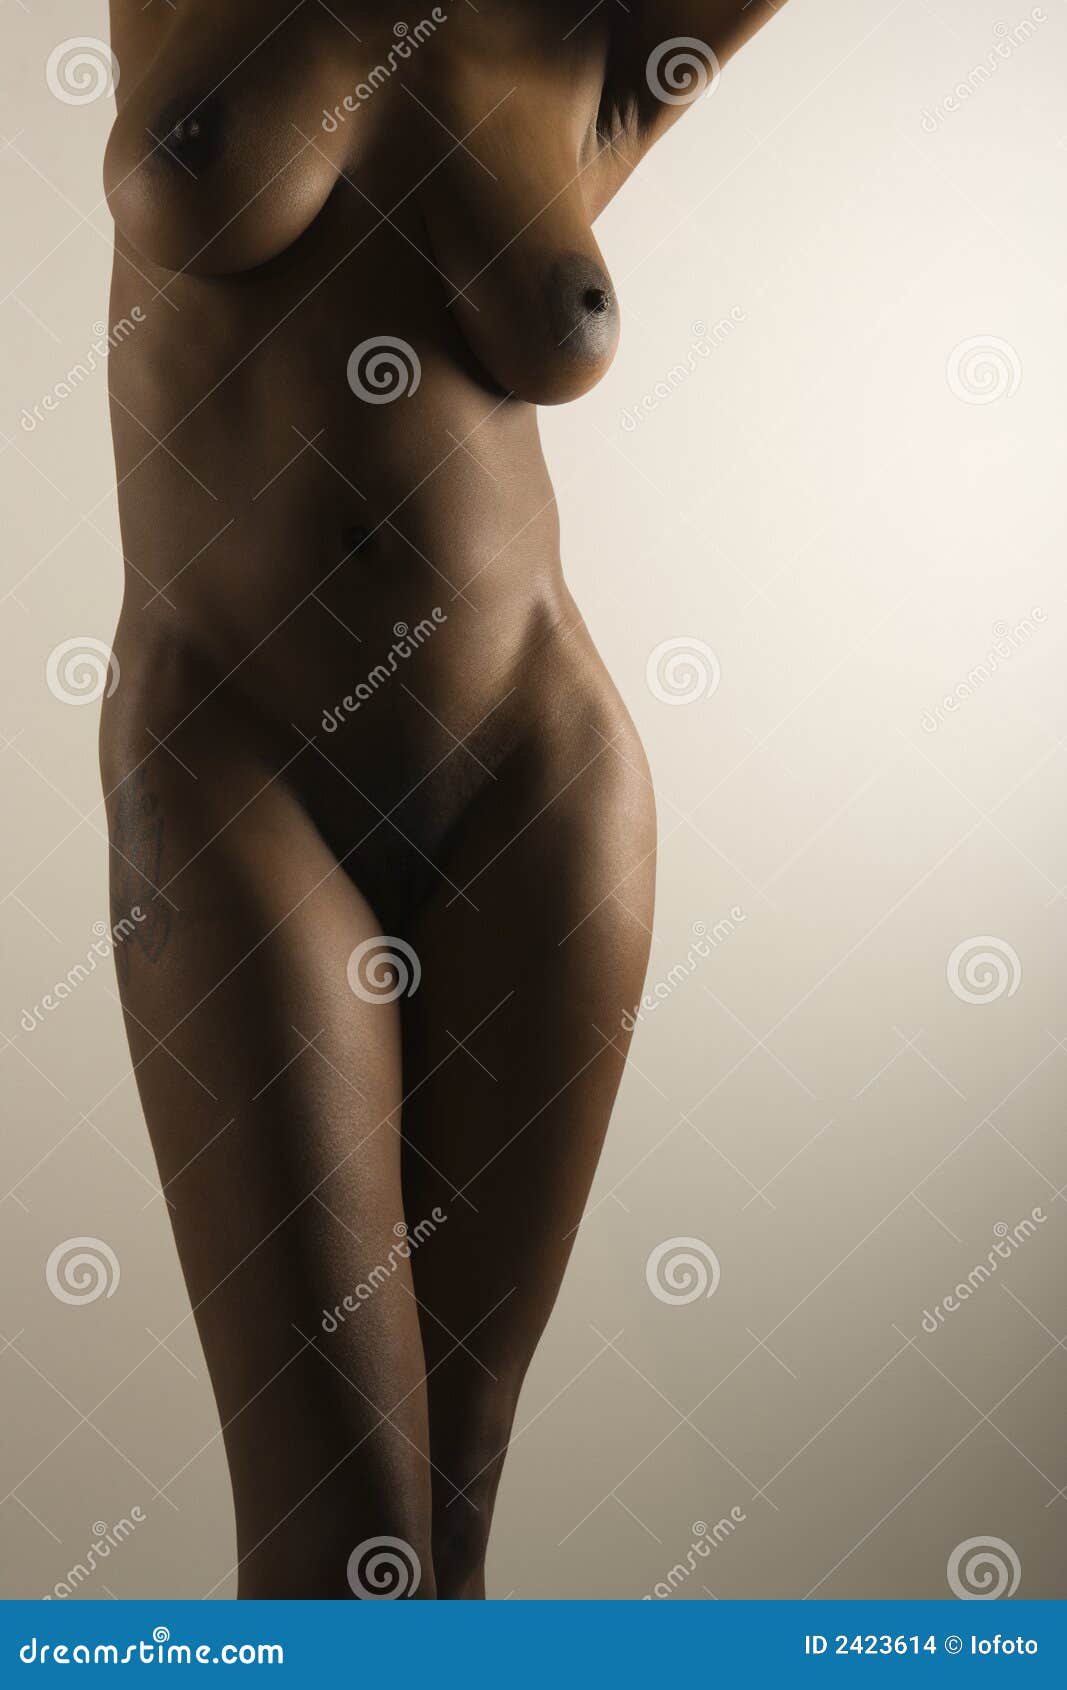 debbie mangan add the female body nude photo